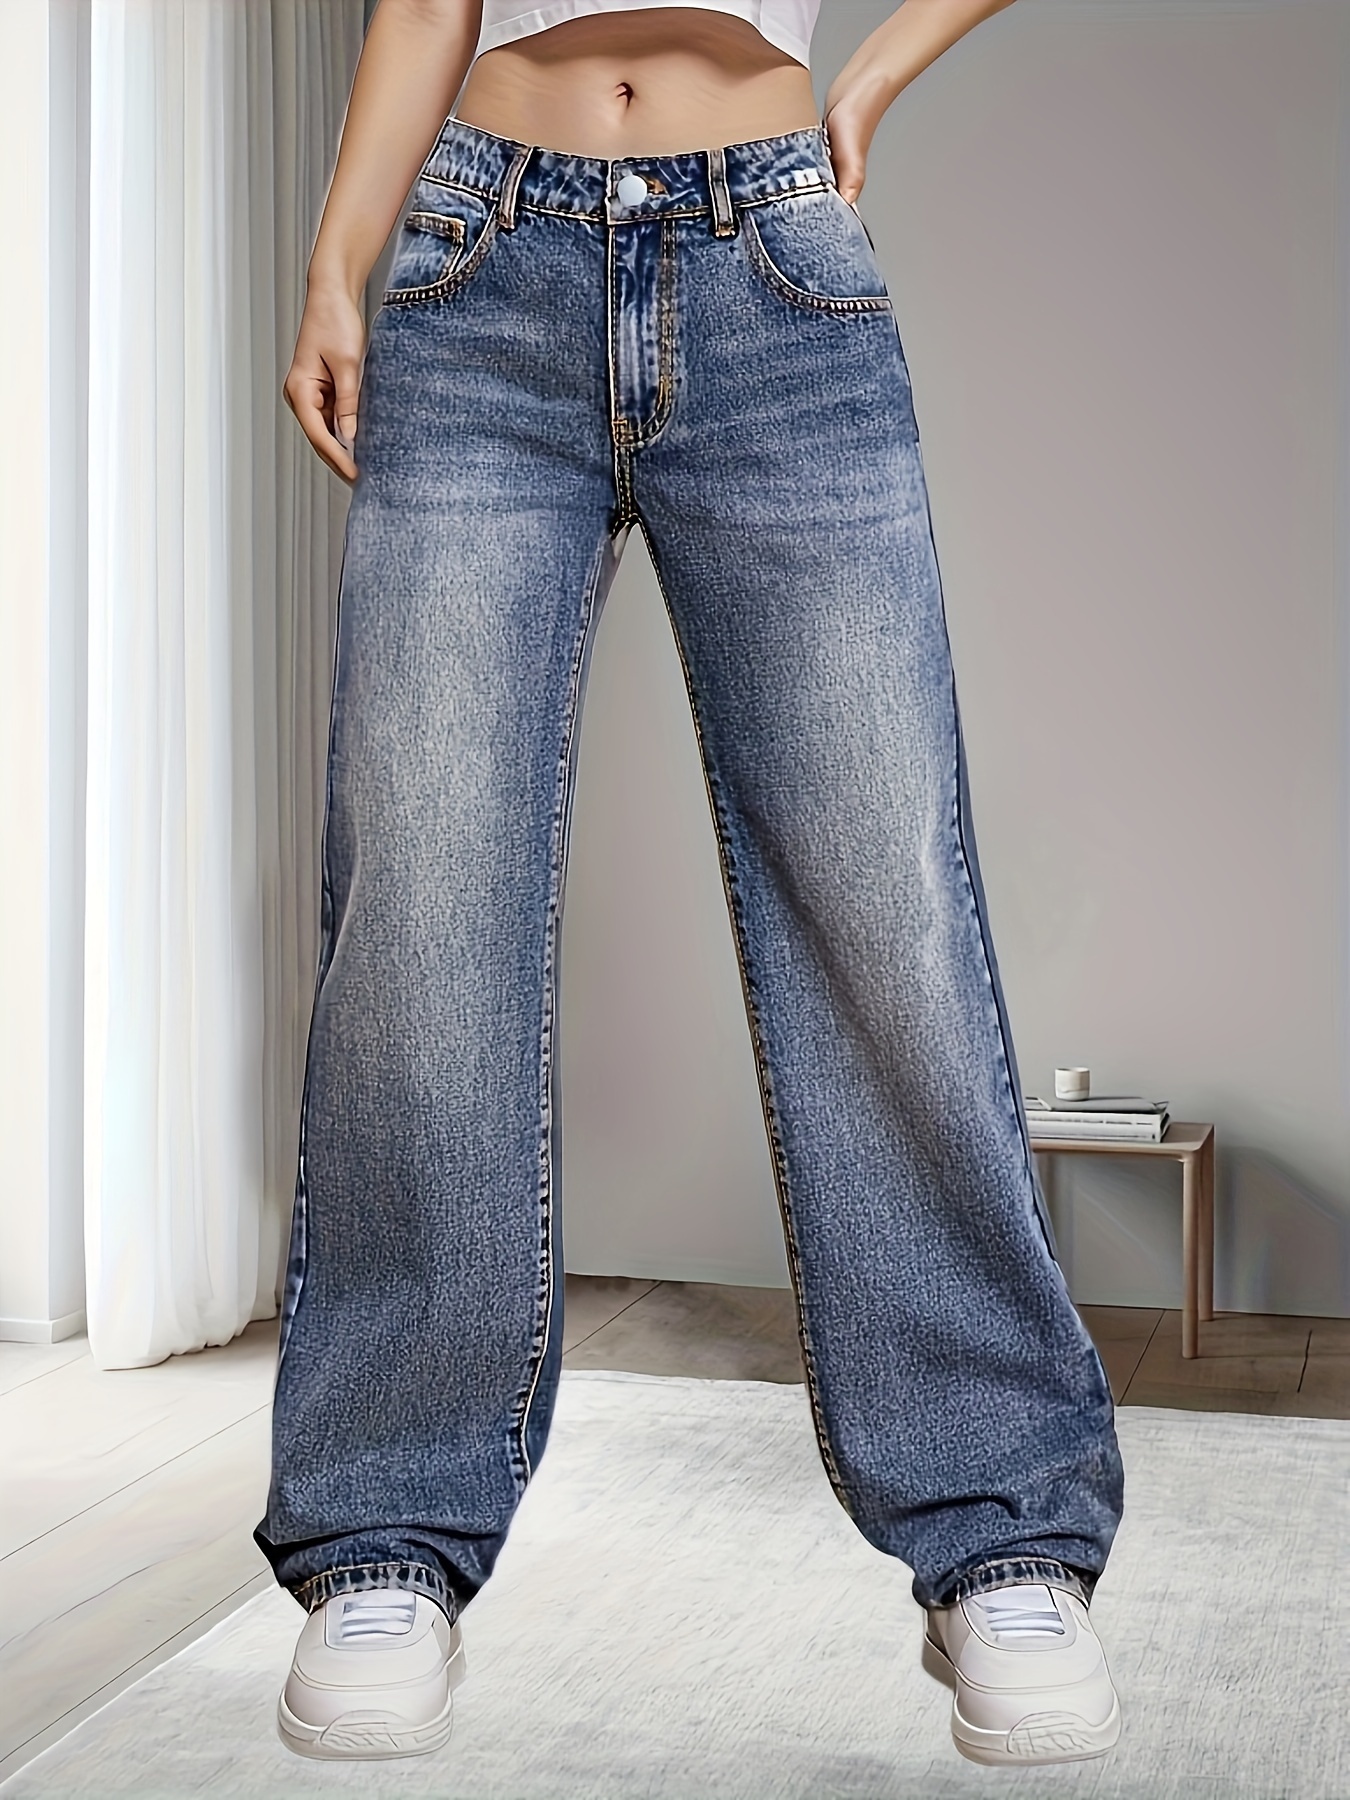 Womens Denim Jeans Comfort Stretch Skinny Trousers Pants Ladies